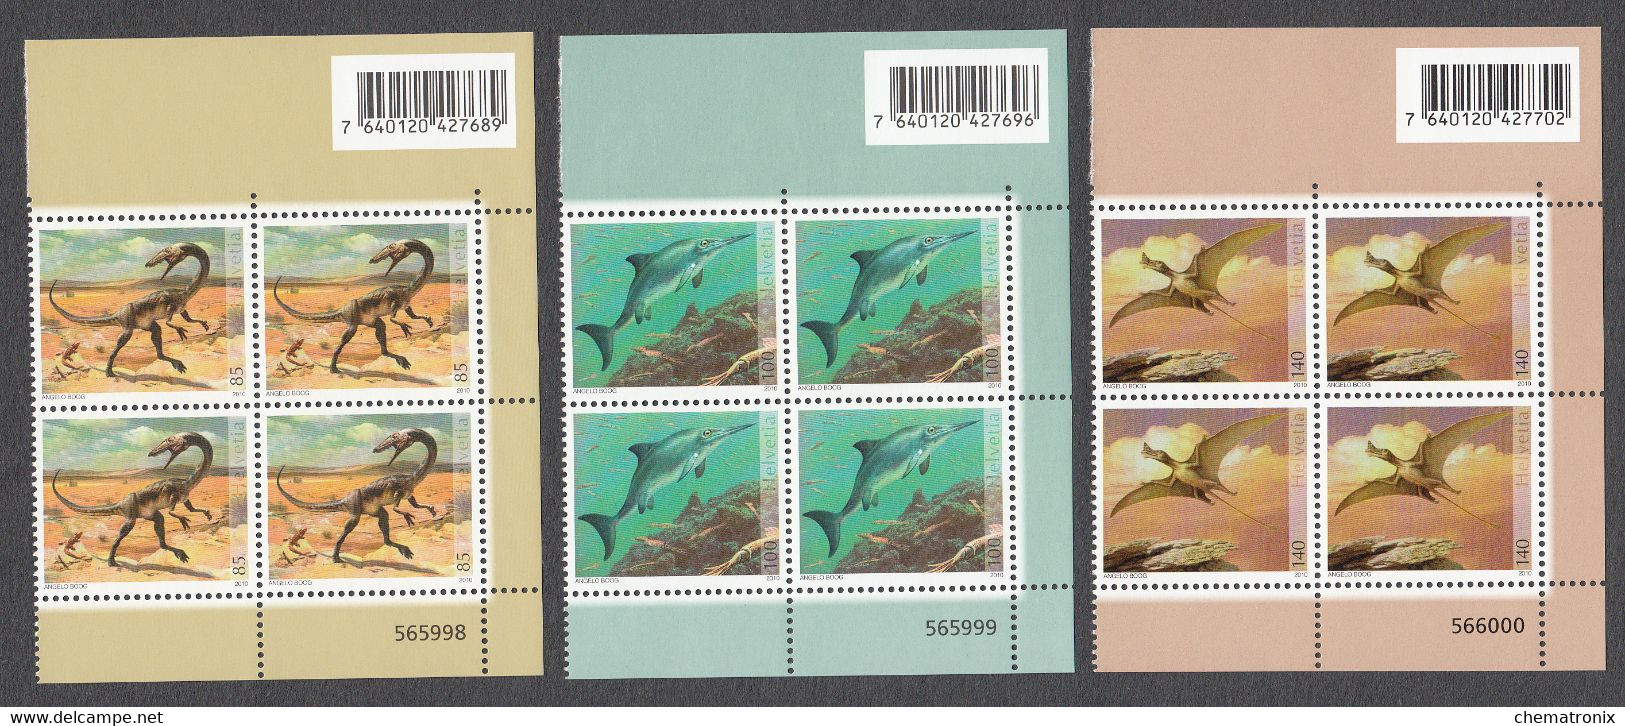 Suiza / Switzerland 2010 - Michel 2167-2169 - Blocks Of 4  ** MNH - Unused Stamps